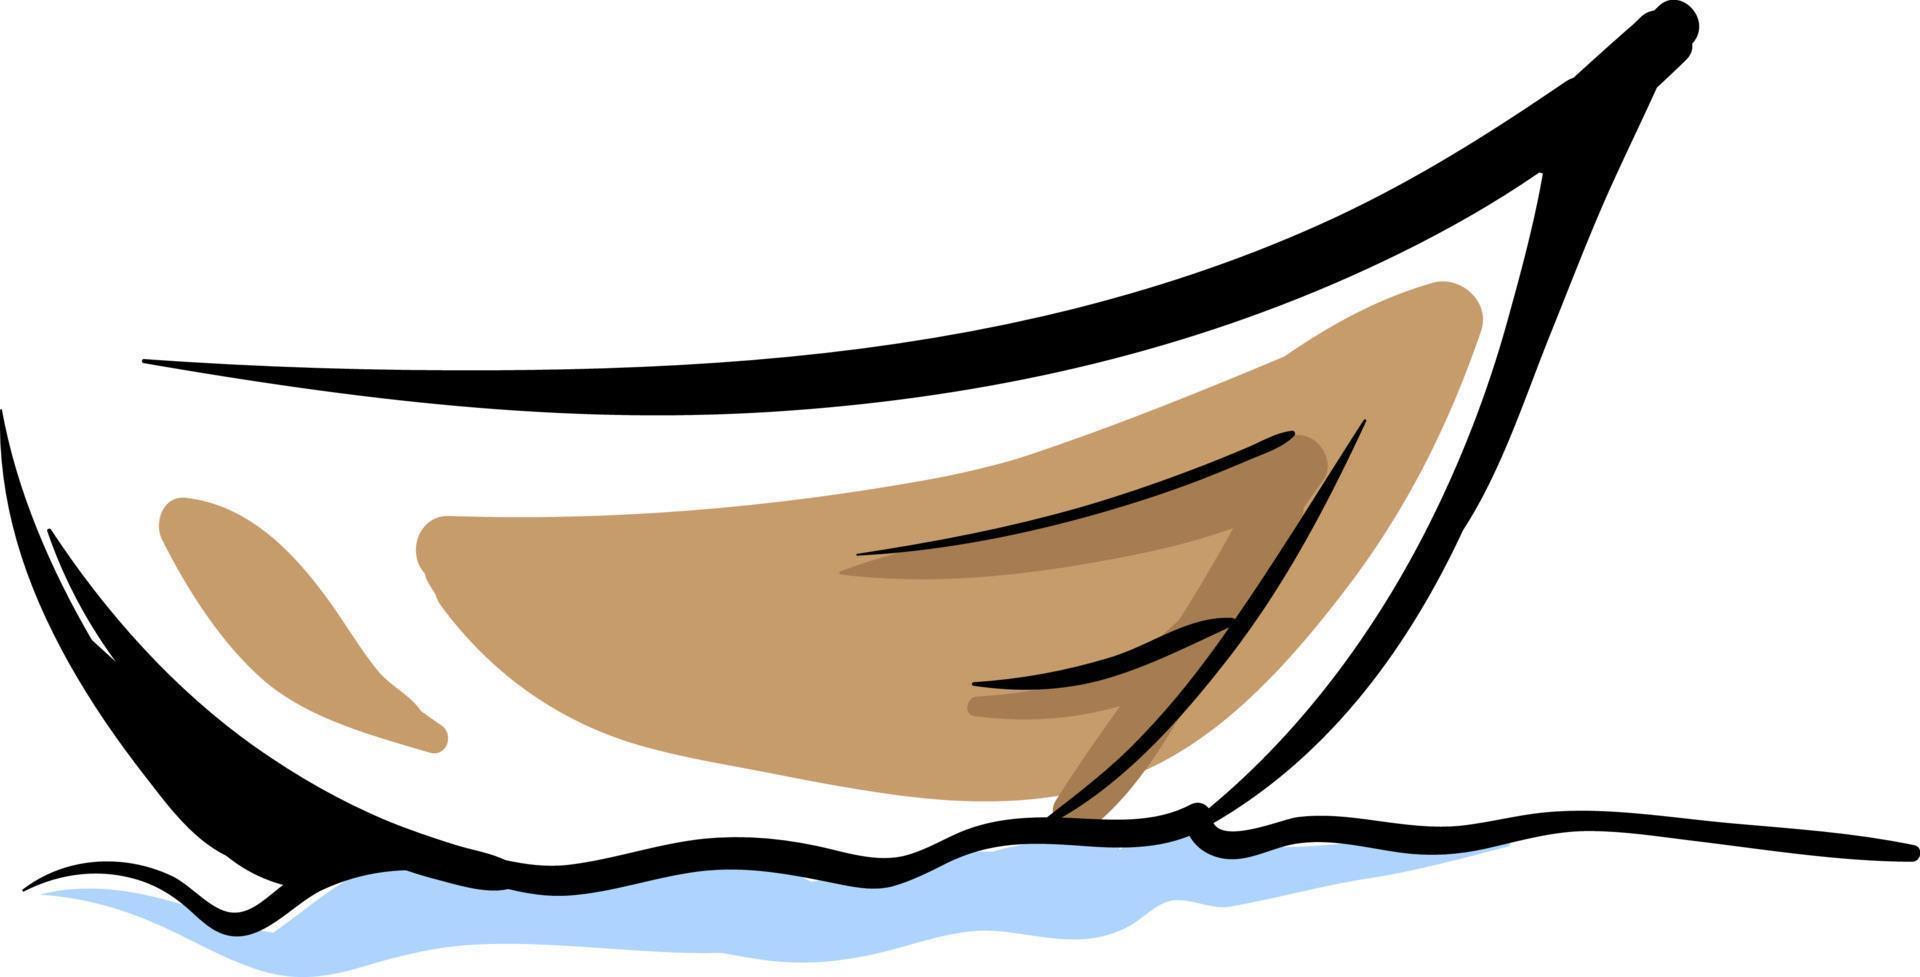 Wooden boat, illustration, vector on white background.